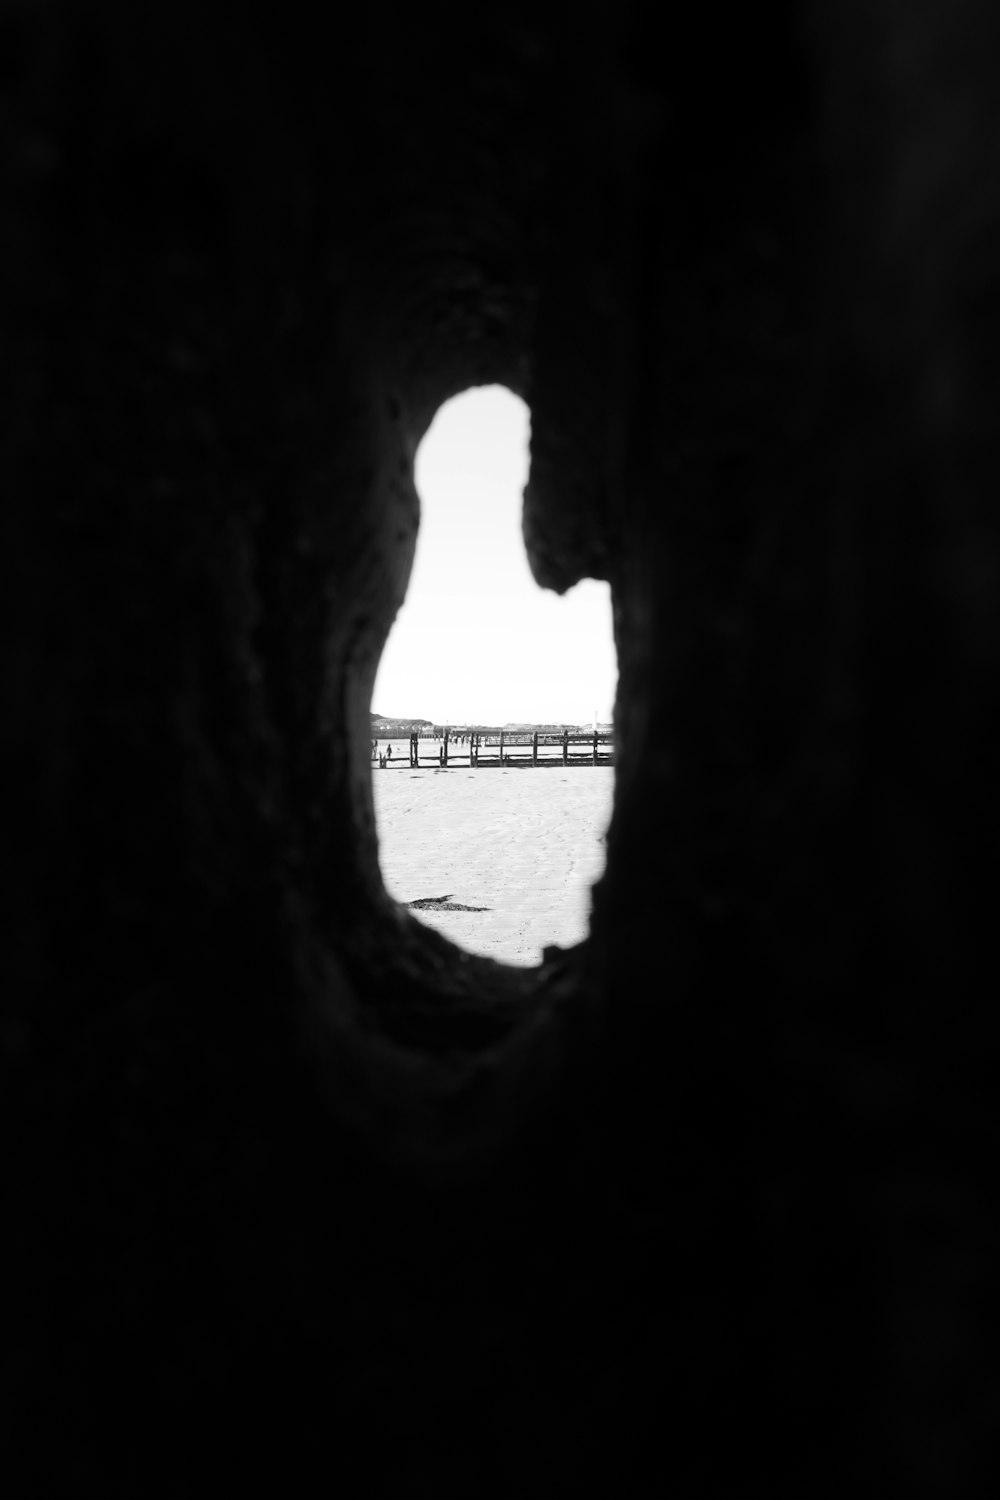 a view of a bridge through a hole in a rock